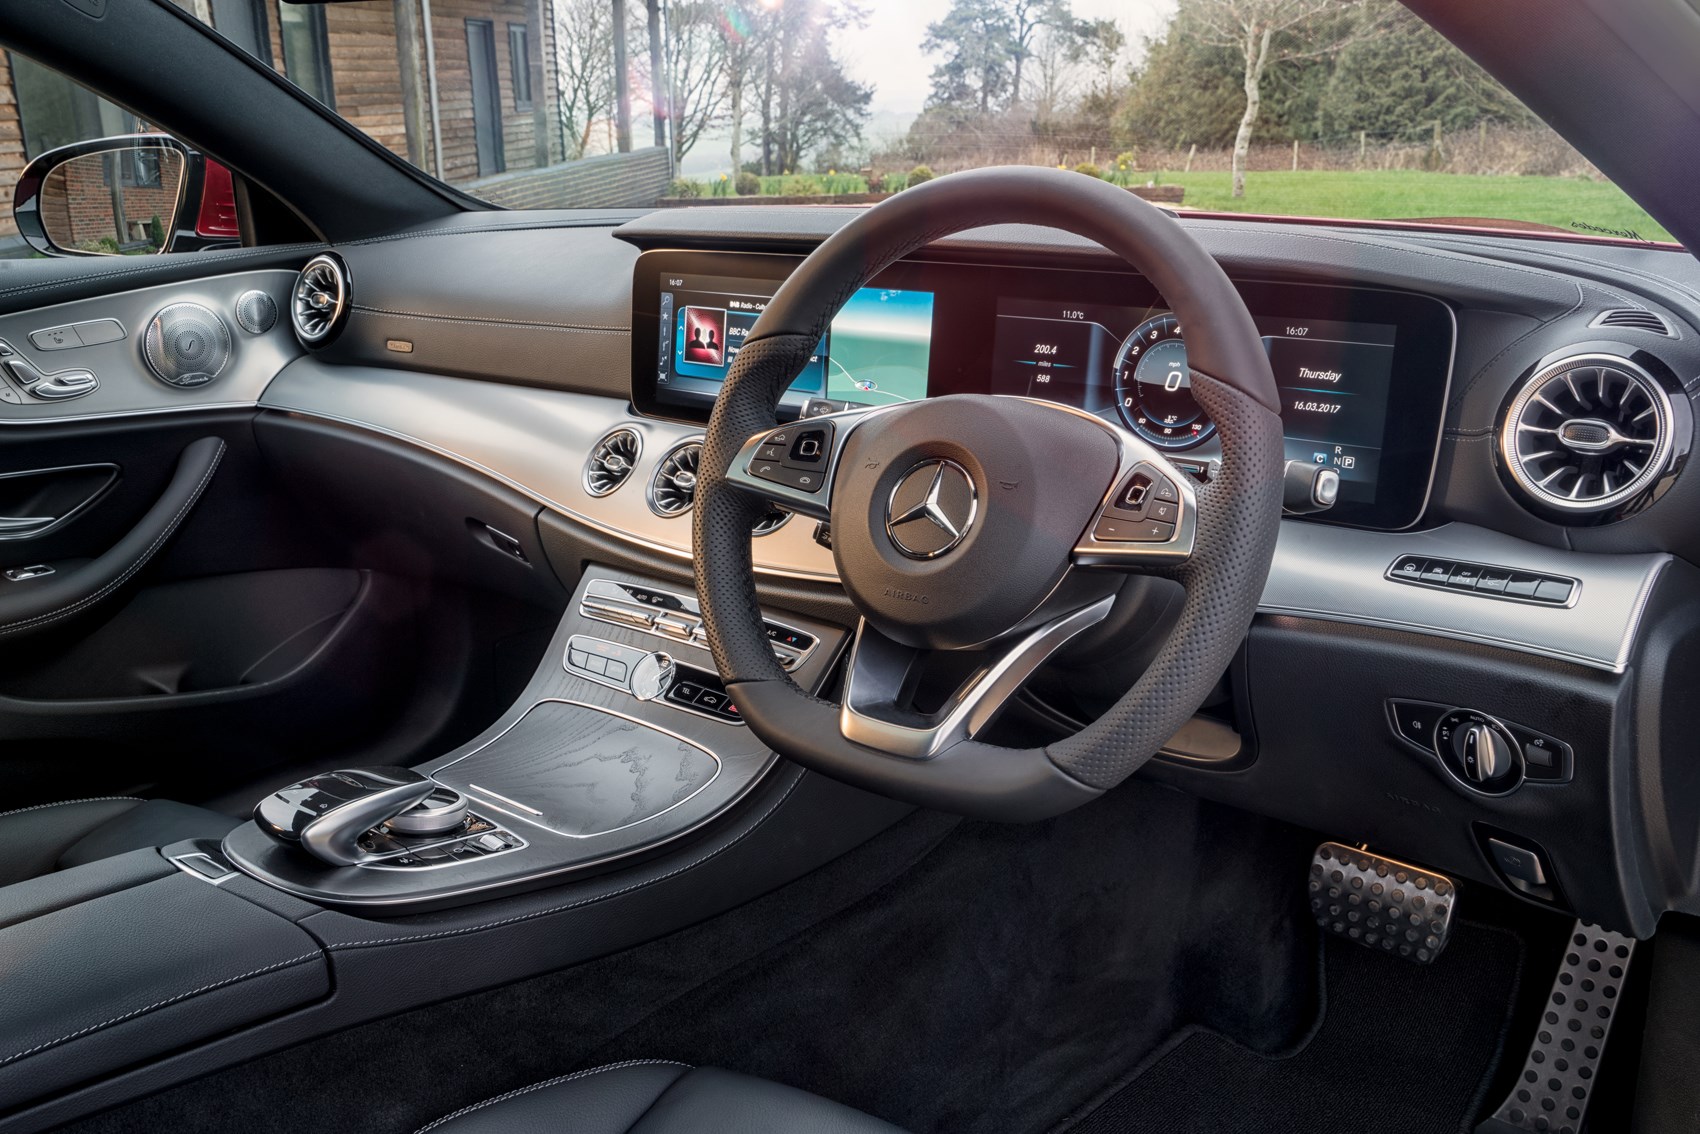 Mercedes Benz E Class Coupe Review 2020 Parkers